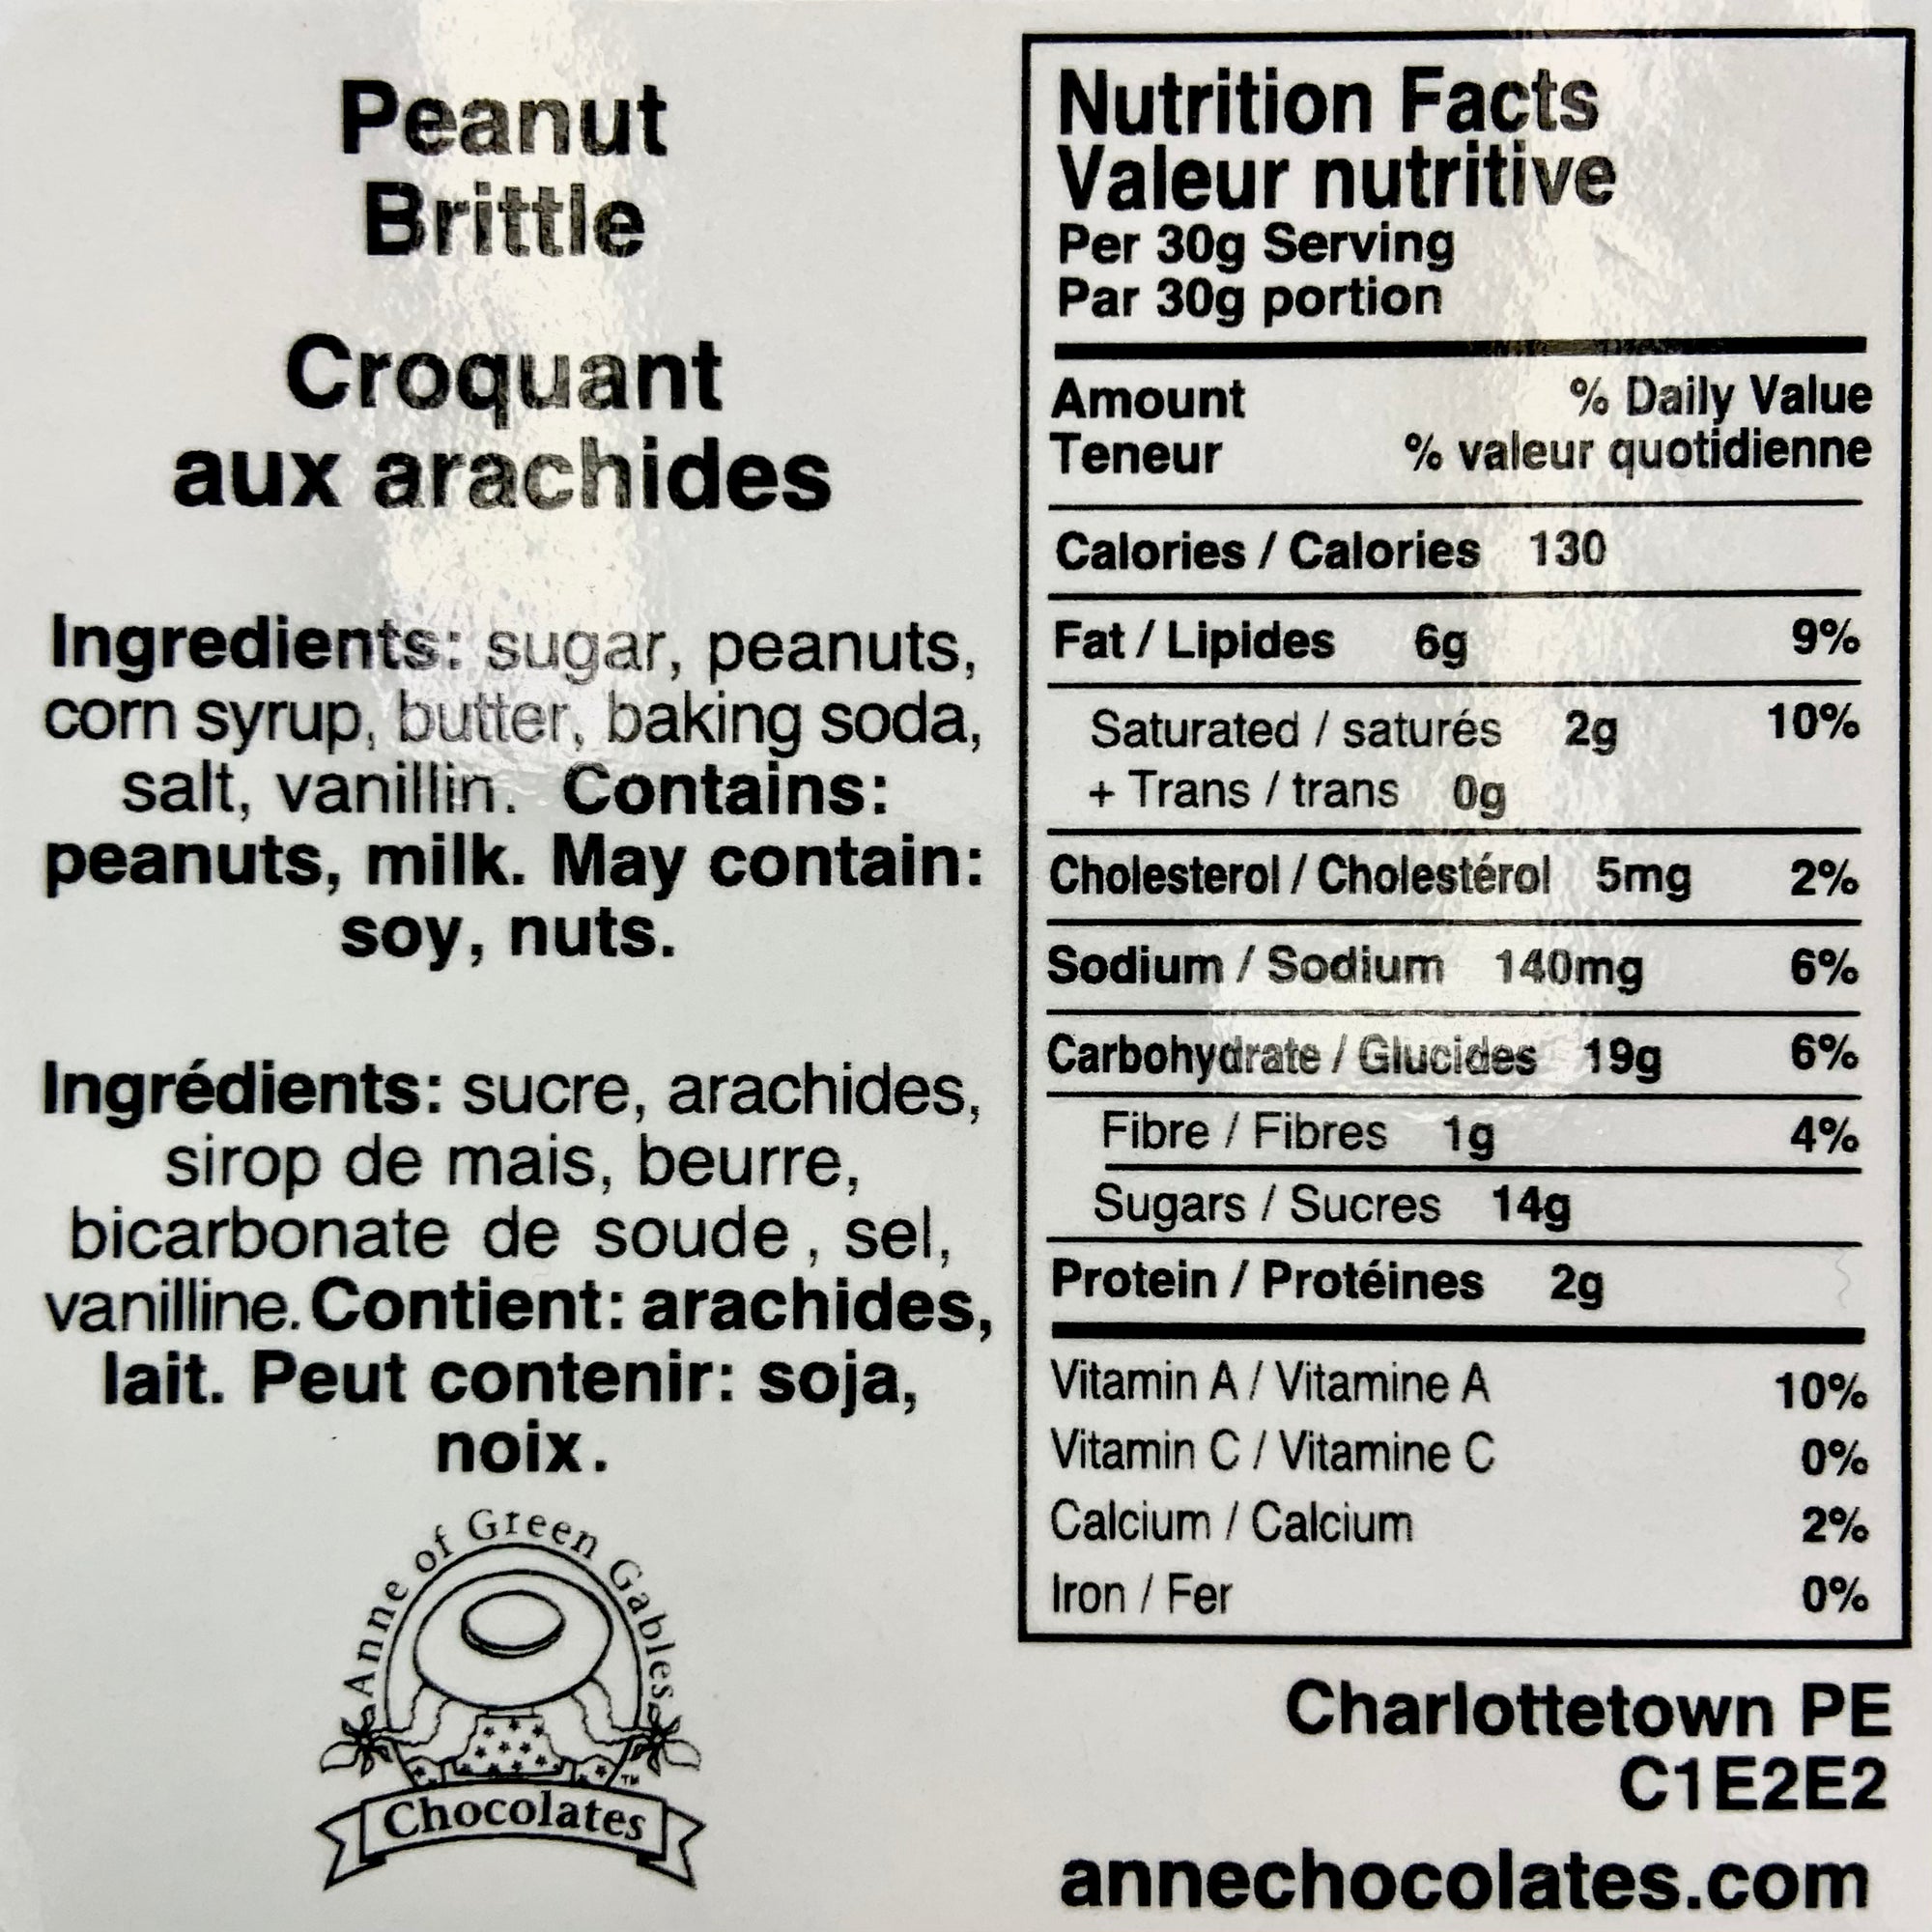 Peanut Brittle Nutritional Label